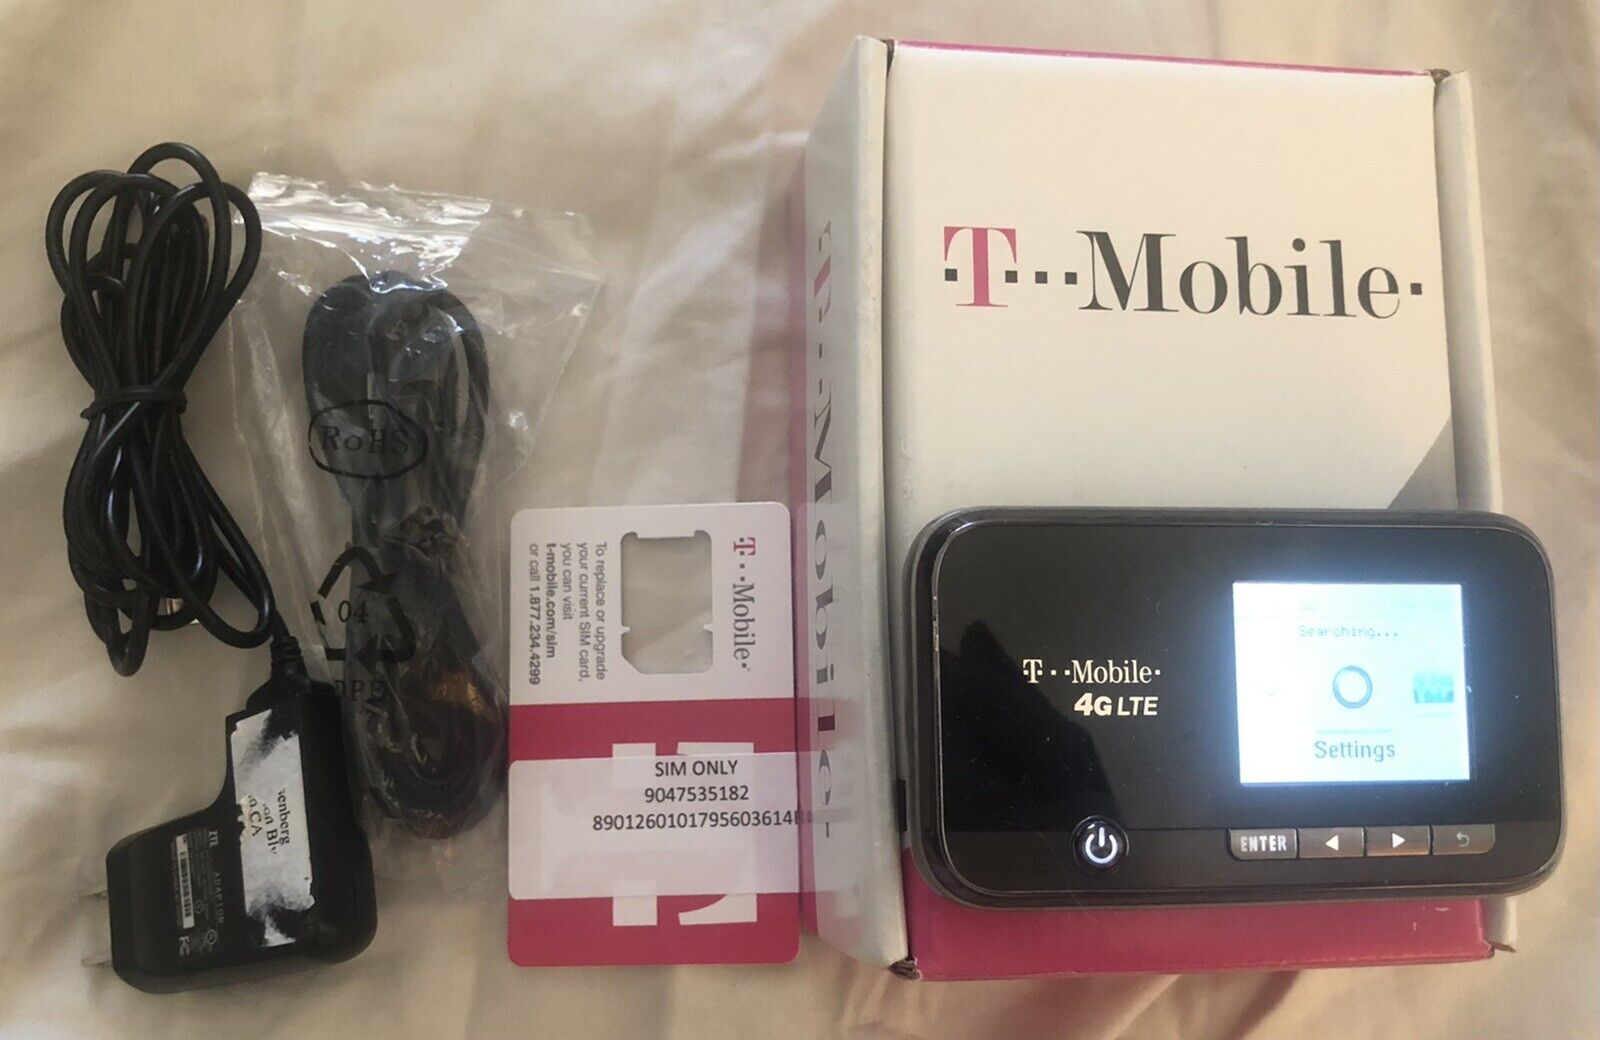 T-Mobile 4G LTE Mobile WiFi Hotspot MF 96 Box Unit Charger & USB Cord